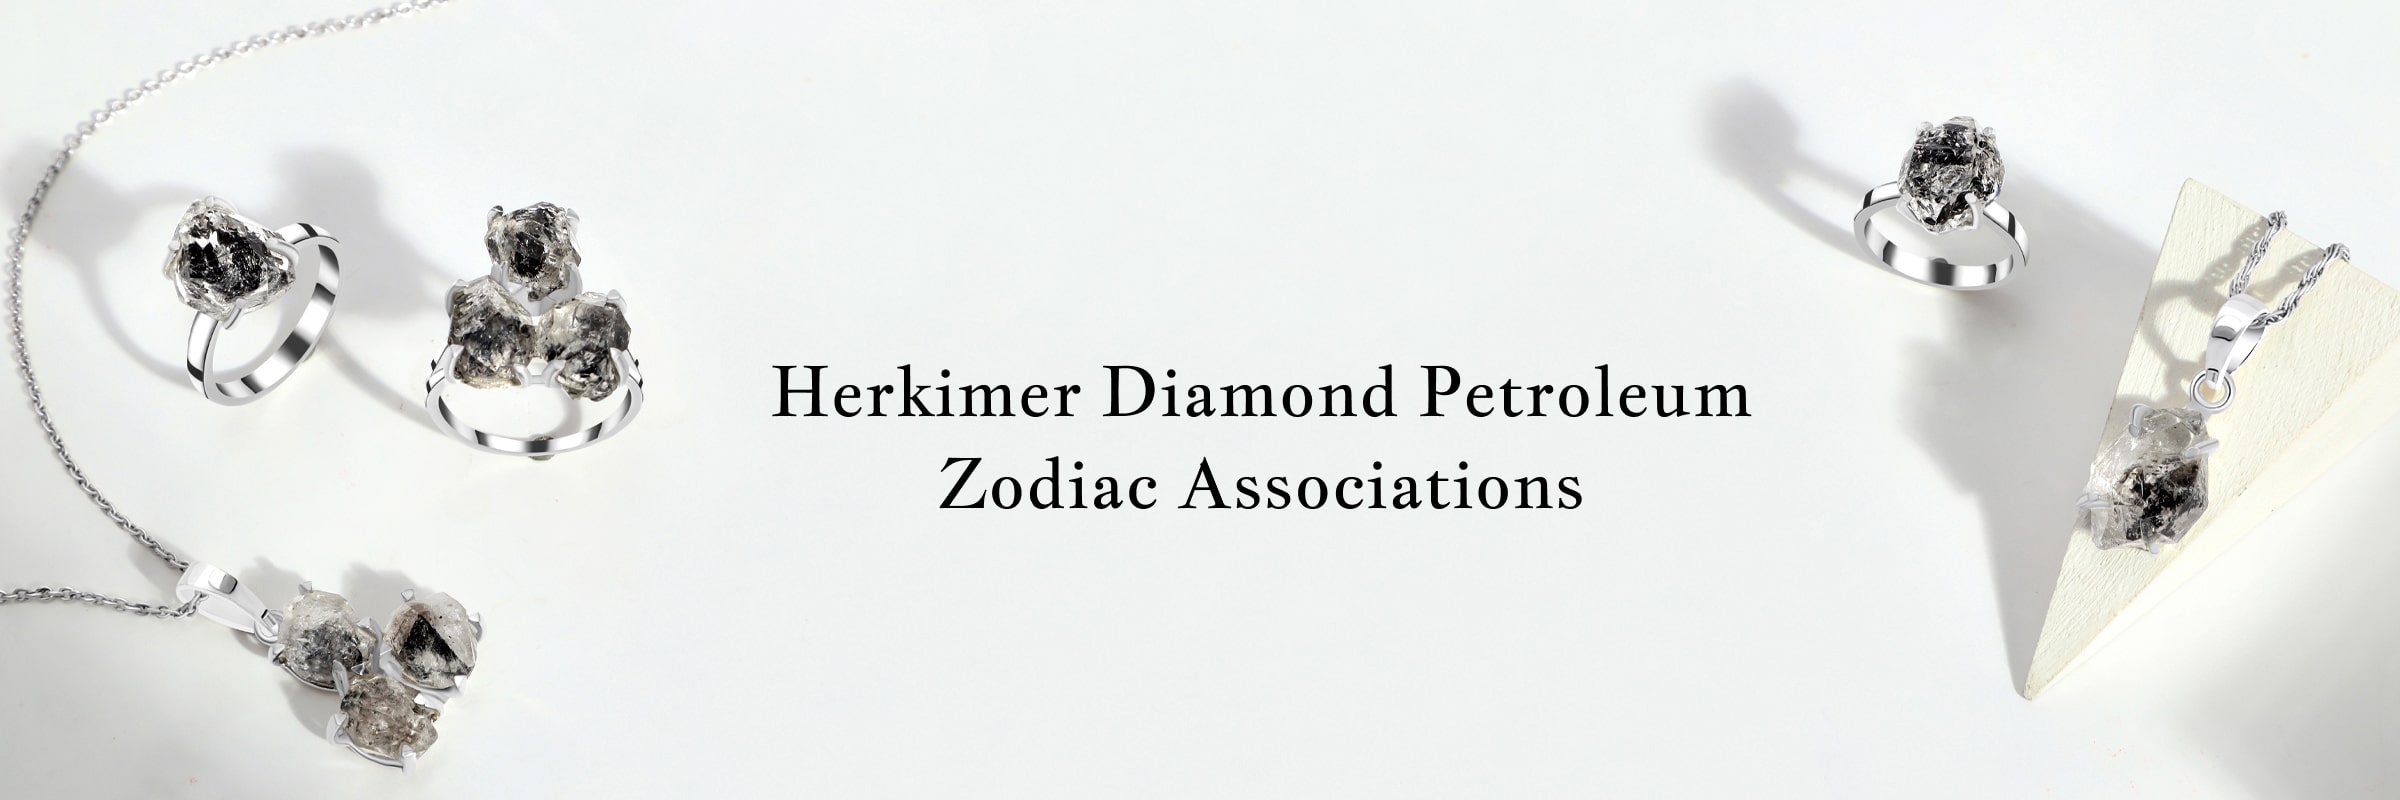 Zodiac sign of Herkimer diamond